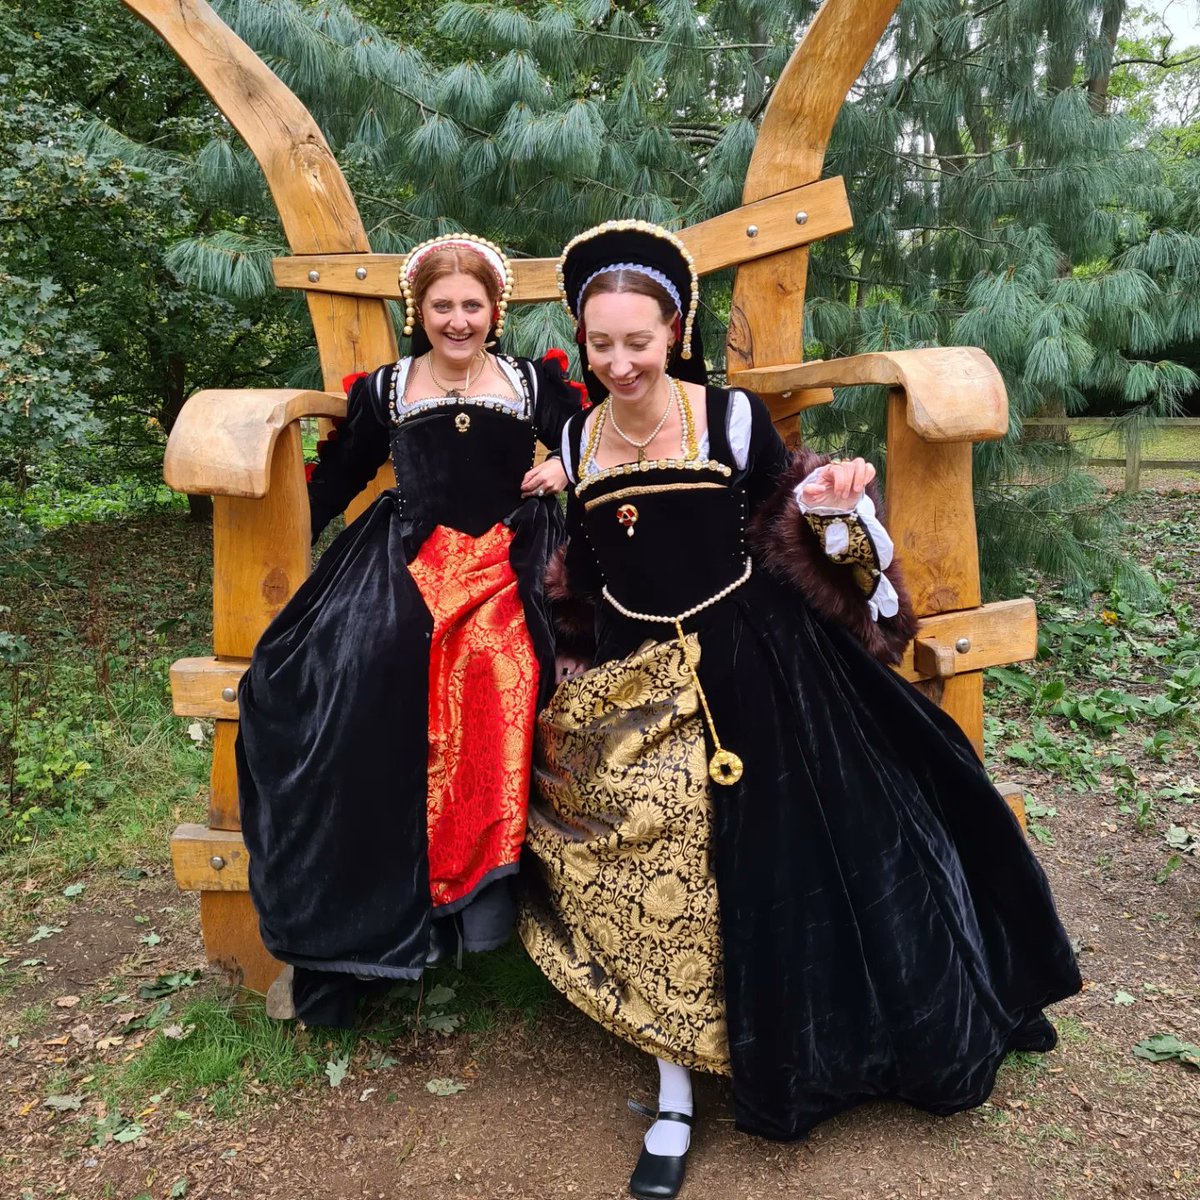 Girls Just Wanna Have Fun 🩷

Anne Boleyn and Catherine Howard @KnebworthHouse 

#girlsjustwannahavefun